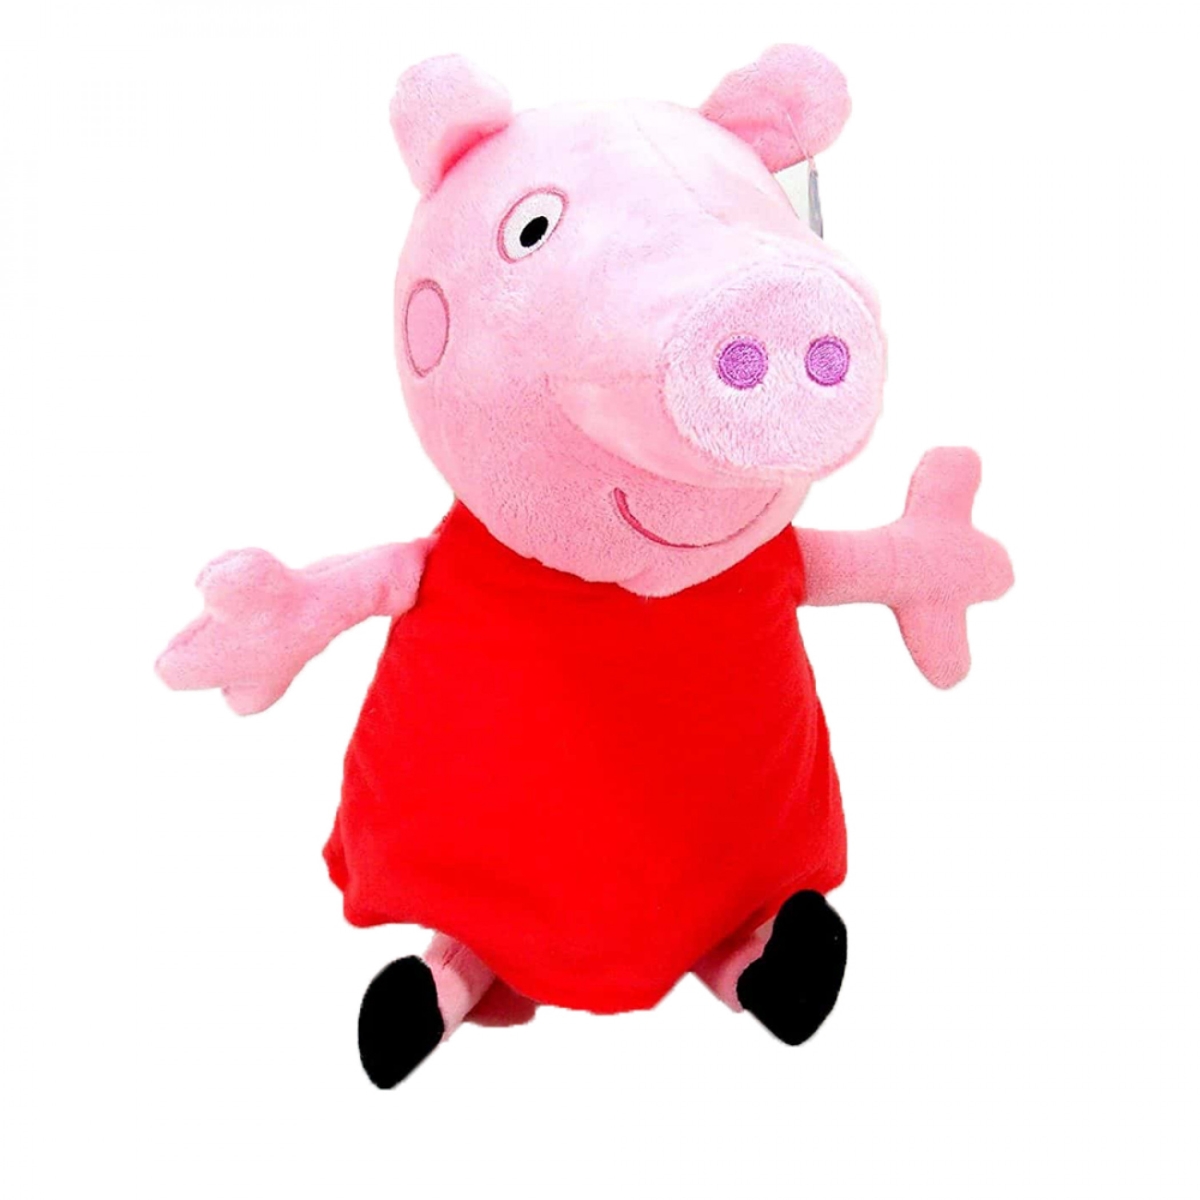 Nickelodeon 846713 13.5 in. Peppa Pig Peppa Plush Doll